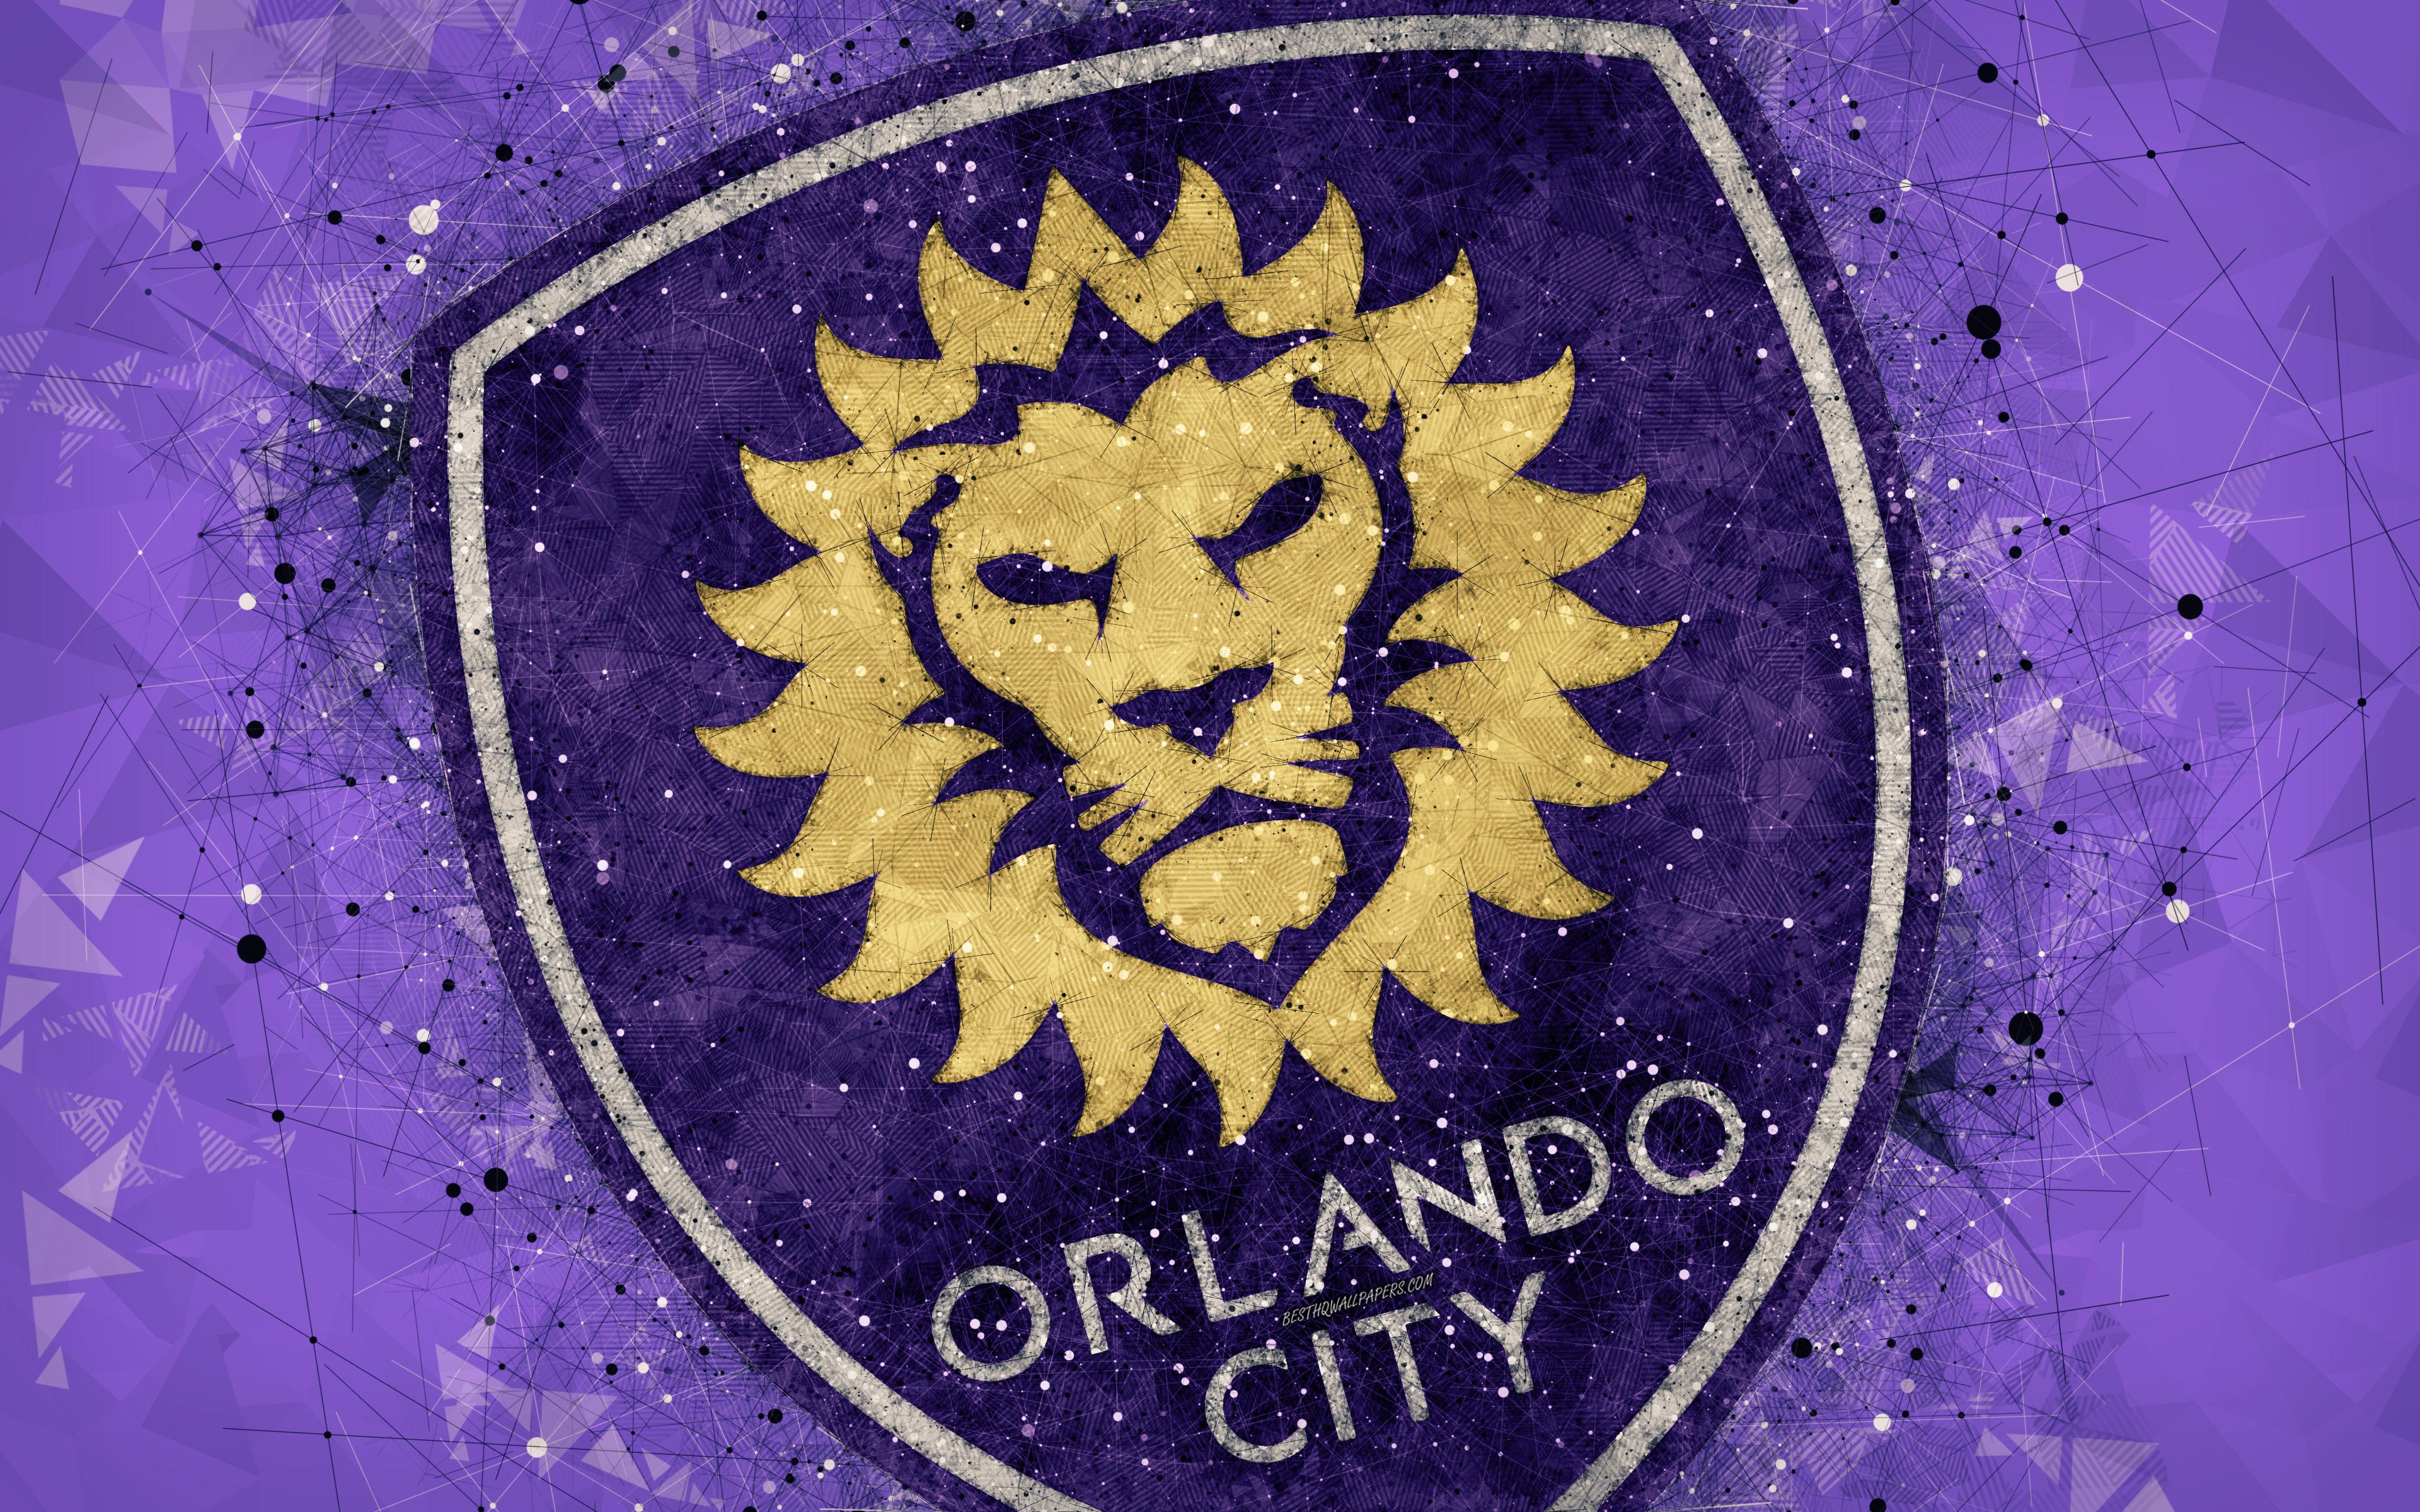 Download wallpaper Orlando City SC, 4k, American soccer club, logo